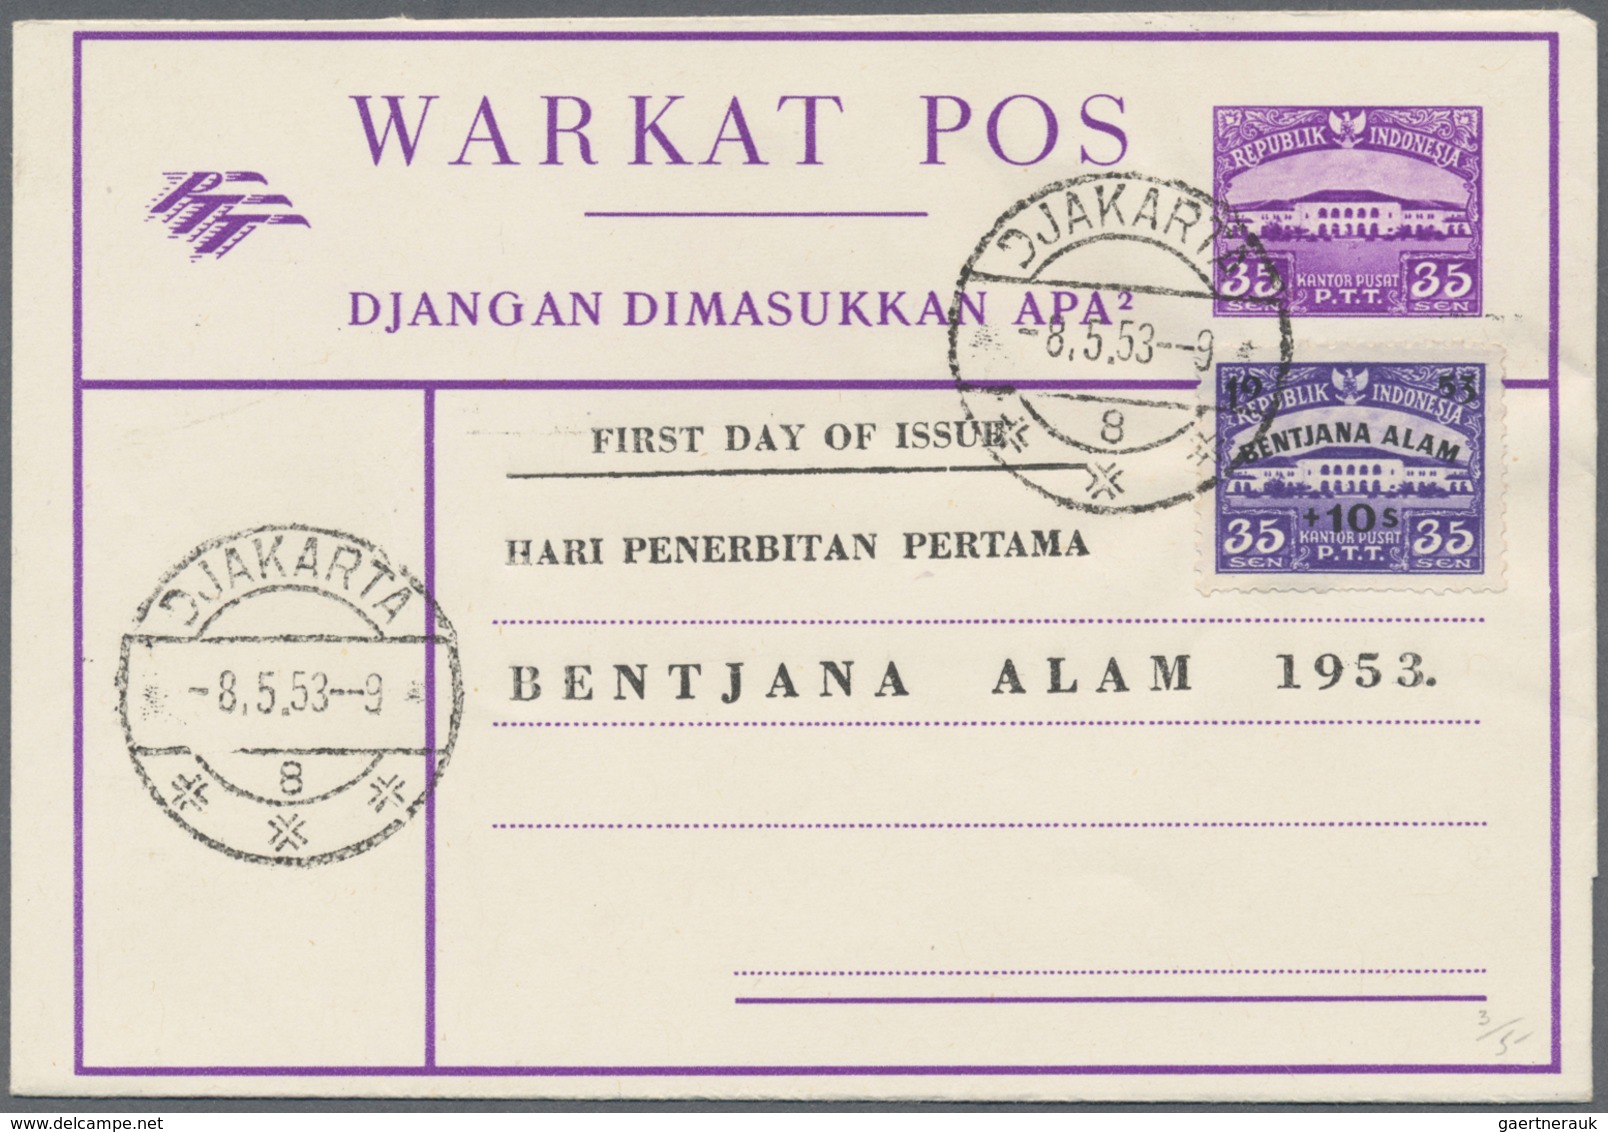 GA Indonesien: 1949/97 (ca.), Stationery Envelopes (warkat Pos / Postblad) Specialized Stock: 10 S. (mi - Indonesia